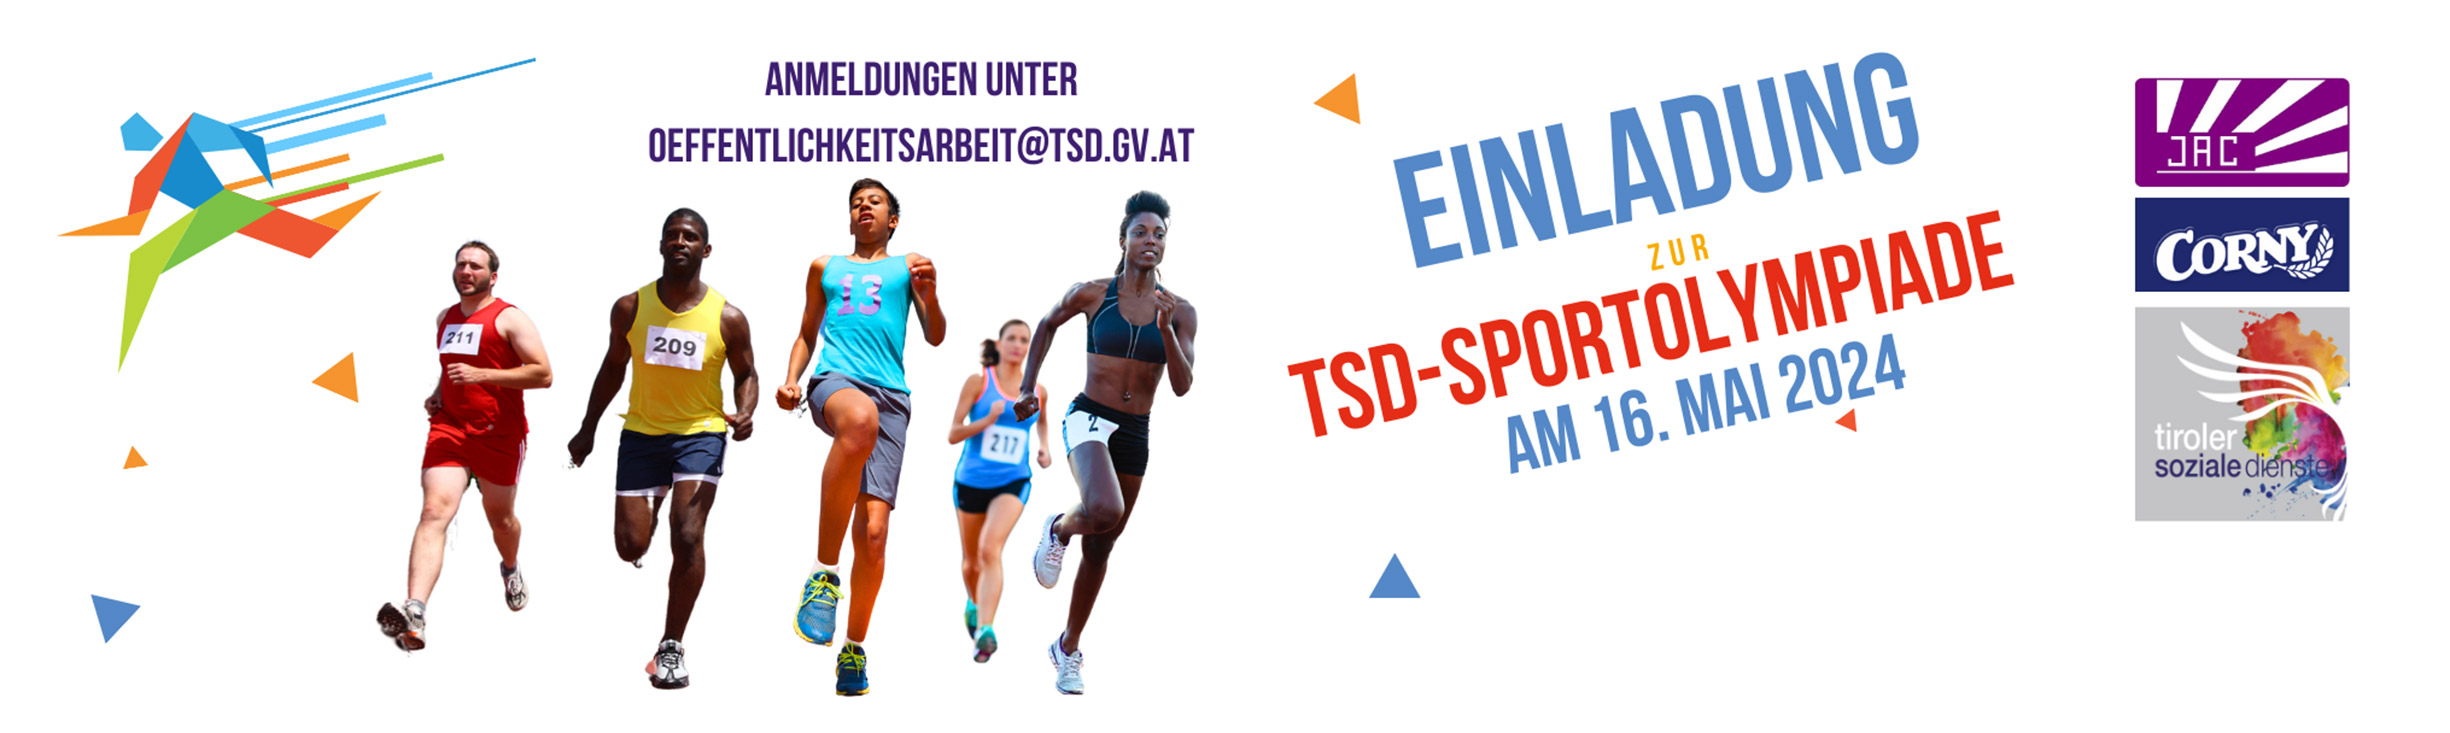 Einladung zur Sportolympiade TSD